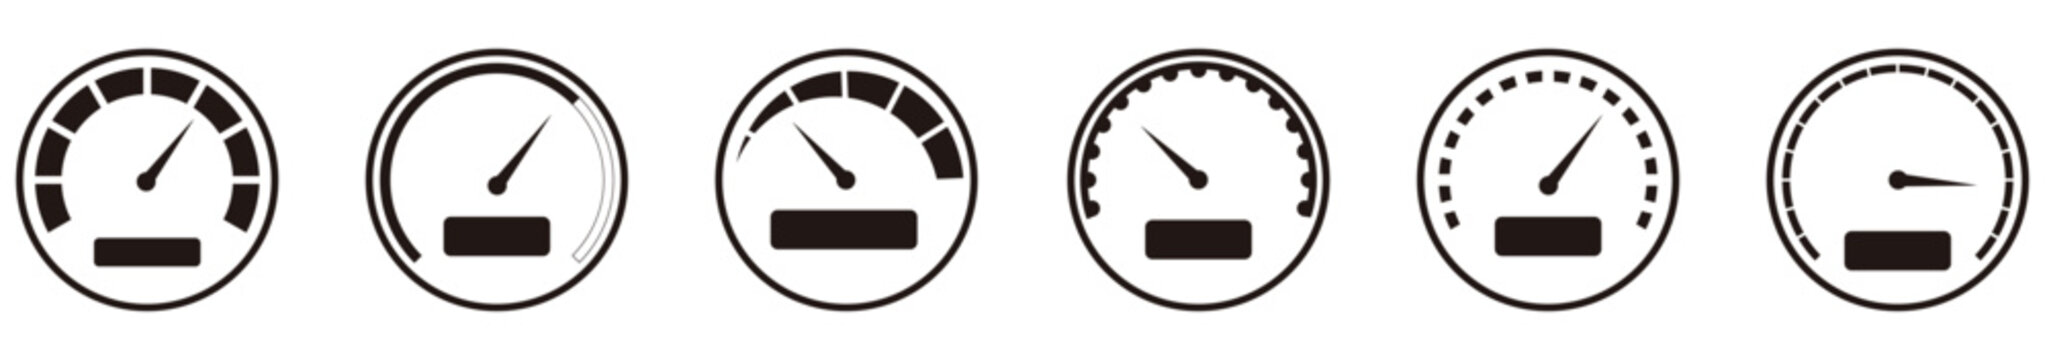 fuel gauge icon set. vector illustration. fuel gauge indicator, dashboard scale icon, car control sensor sign, gasoline indicator collection icons – vector